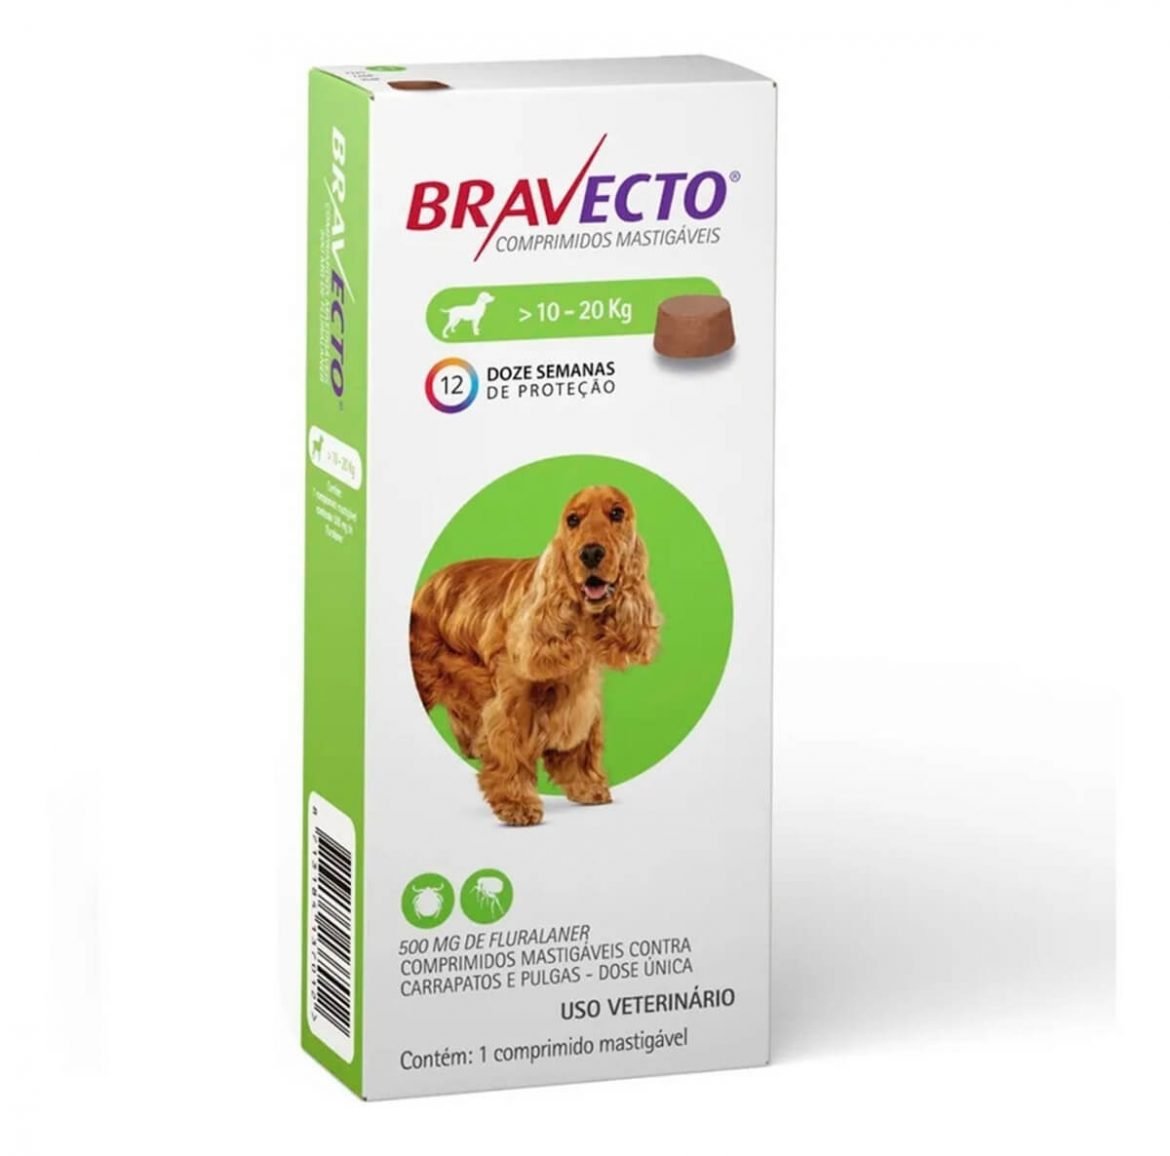 bravecto-10-20kg-500mg-1-comp-q-mascotas